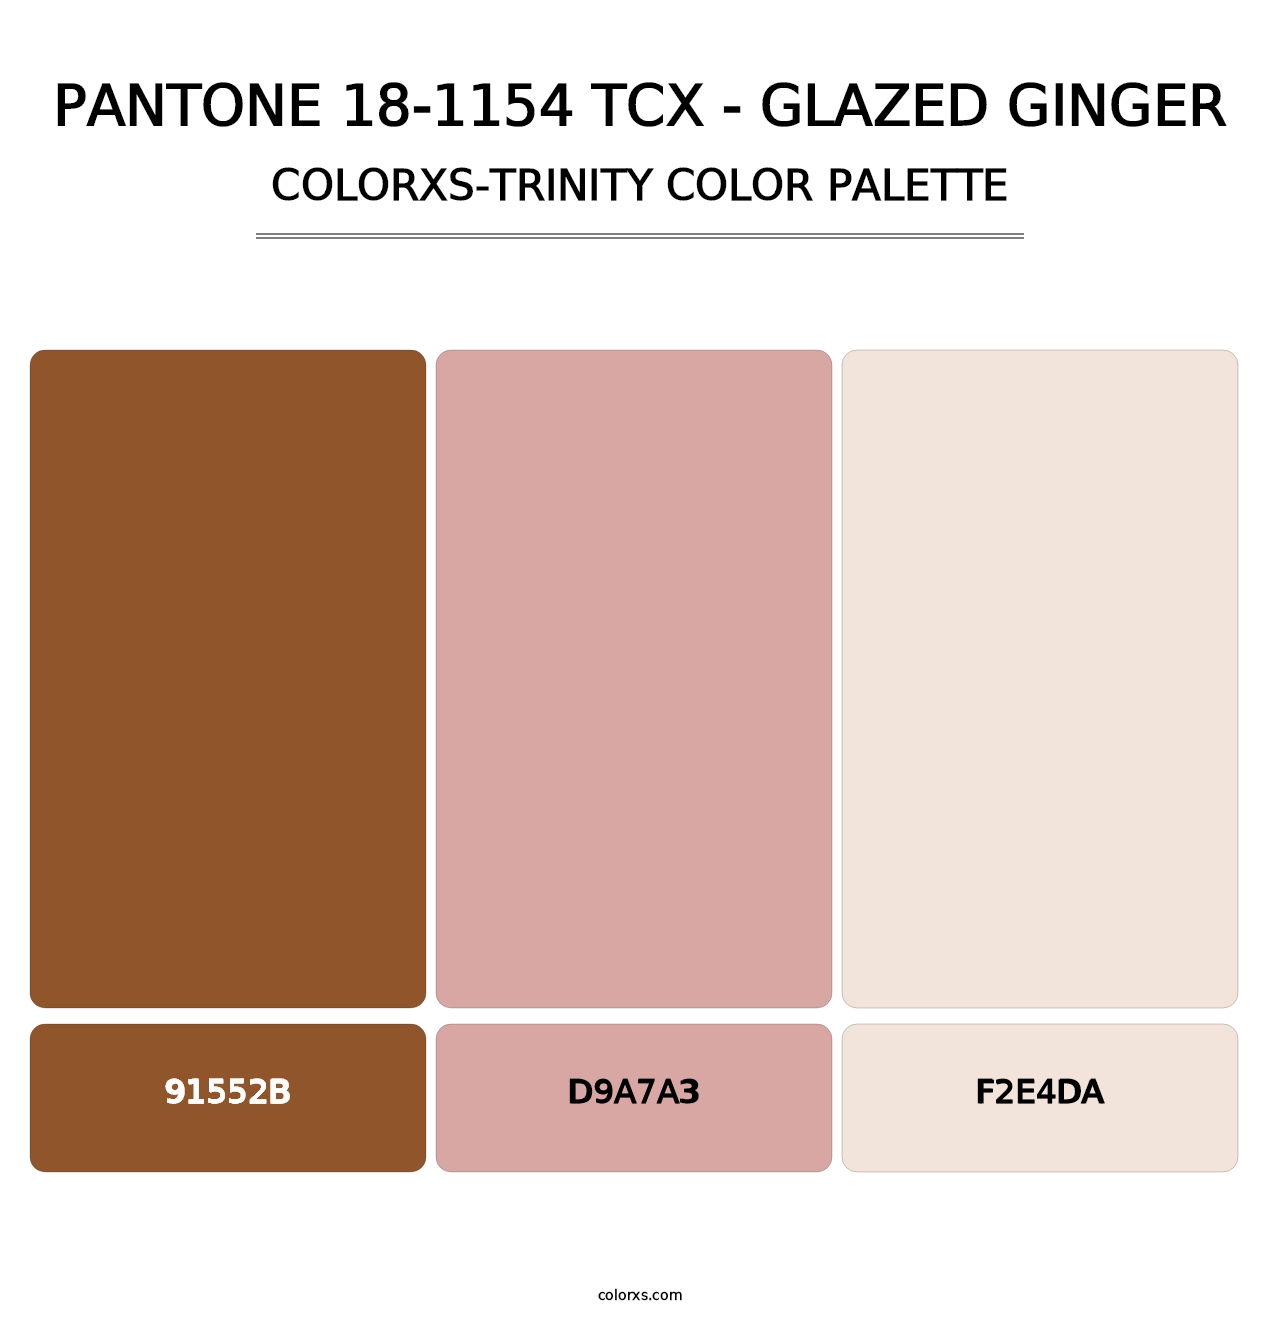 PANTONE 18-1154 TCX - Glazed Ginger - Colorxs Trinity Palette